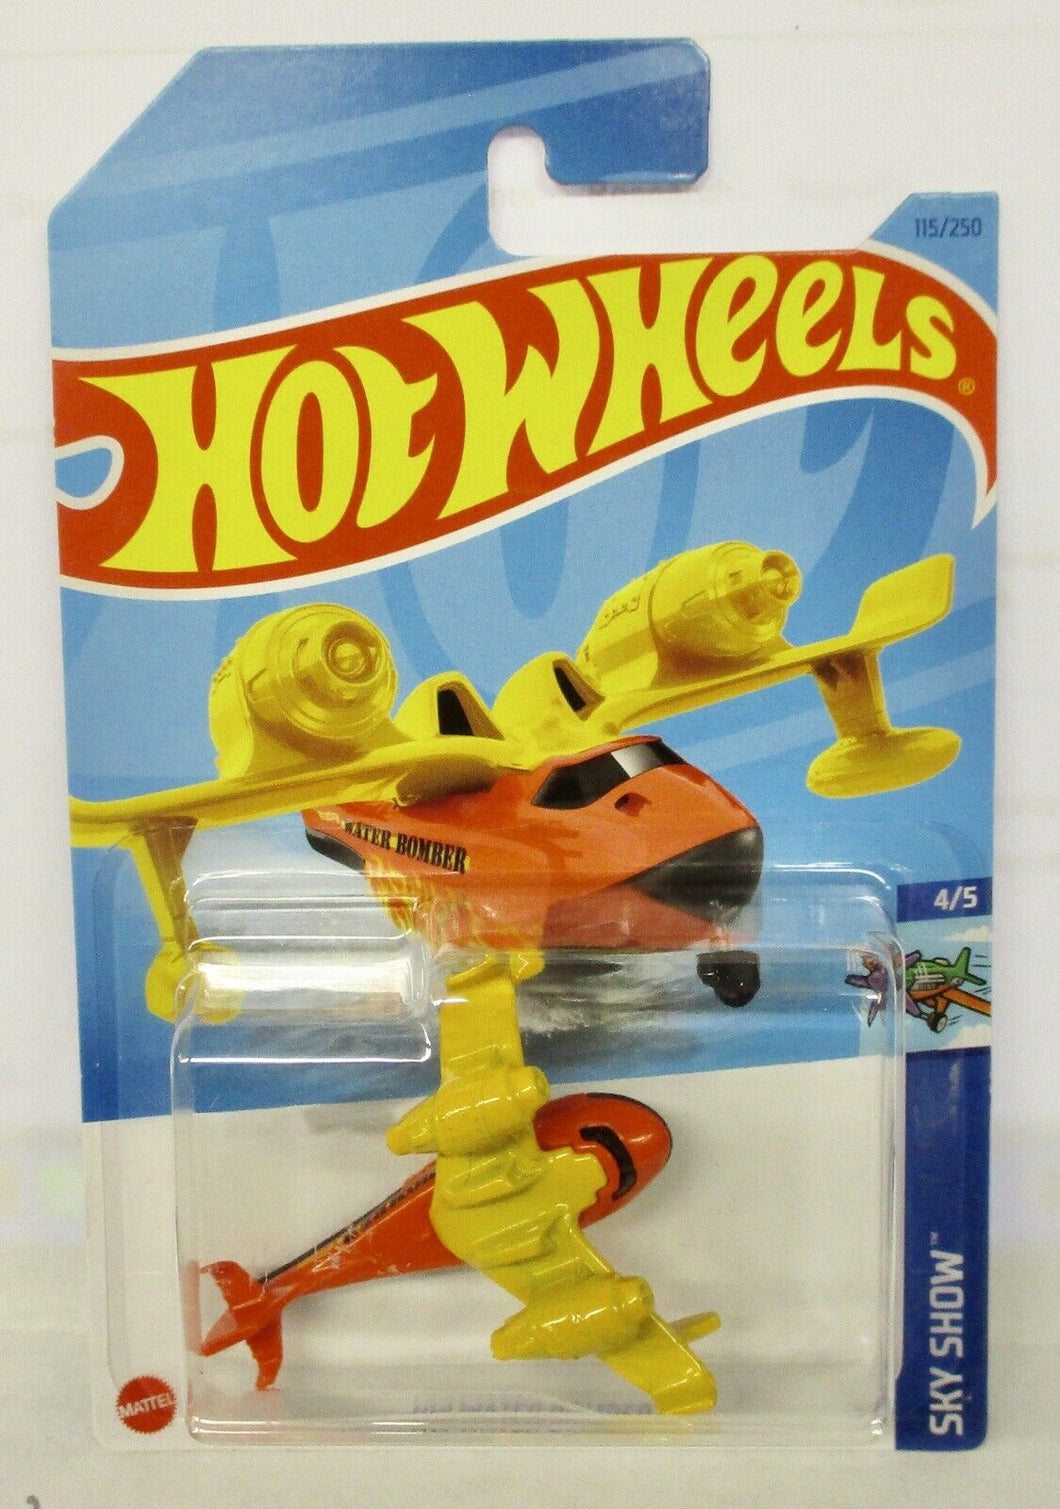 Hot Wheels HW Water Bomber Sky Show 4/5, 115/250